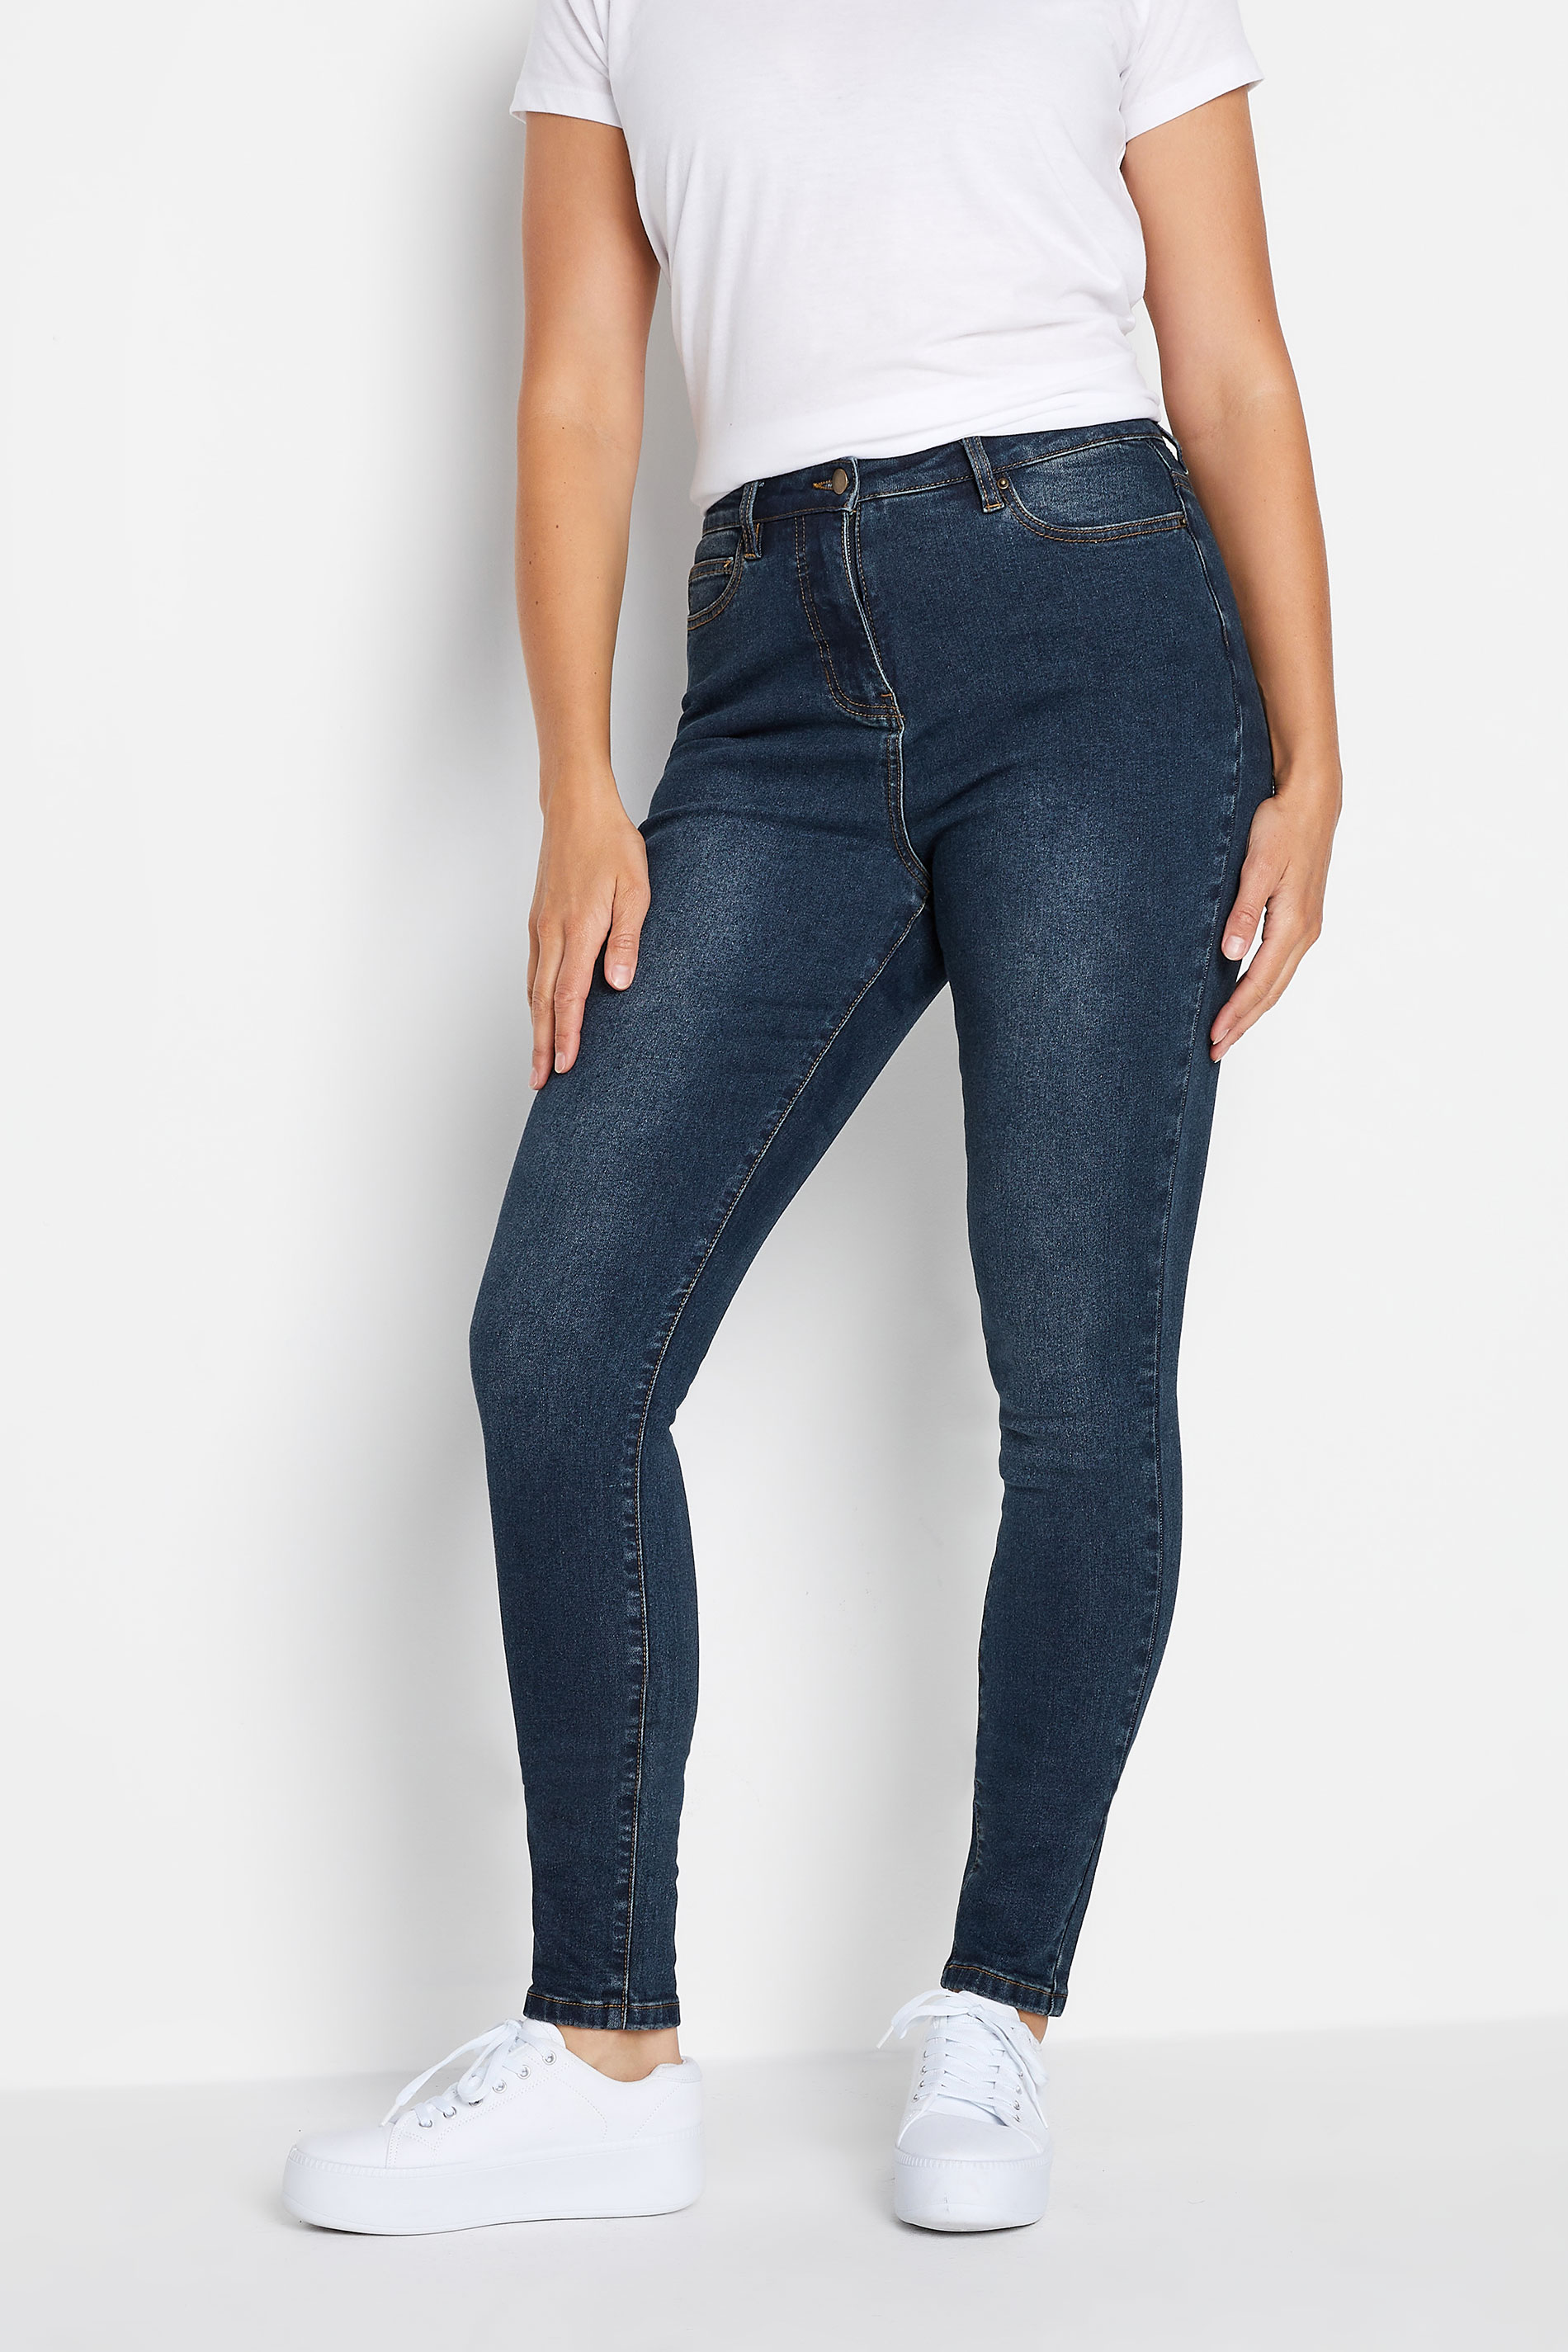 LTS Tall Blue AVA Skinny Jeans | Long Tall Sally  1